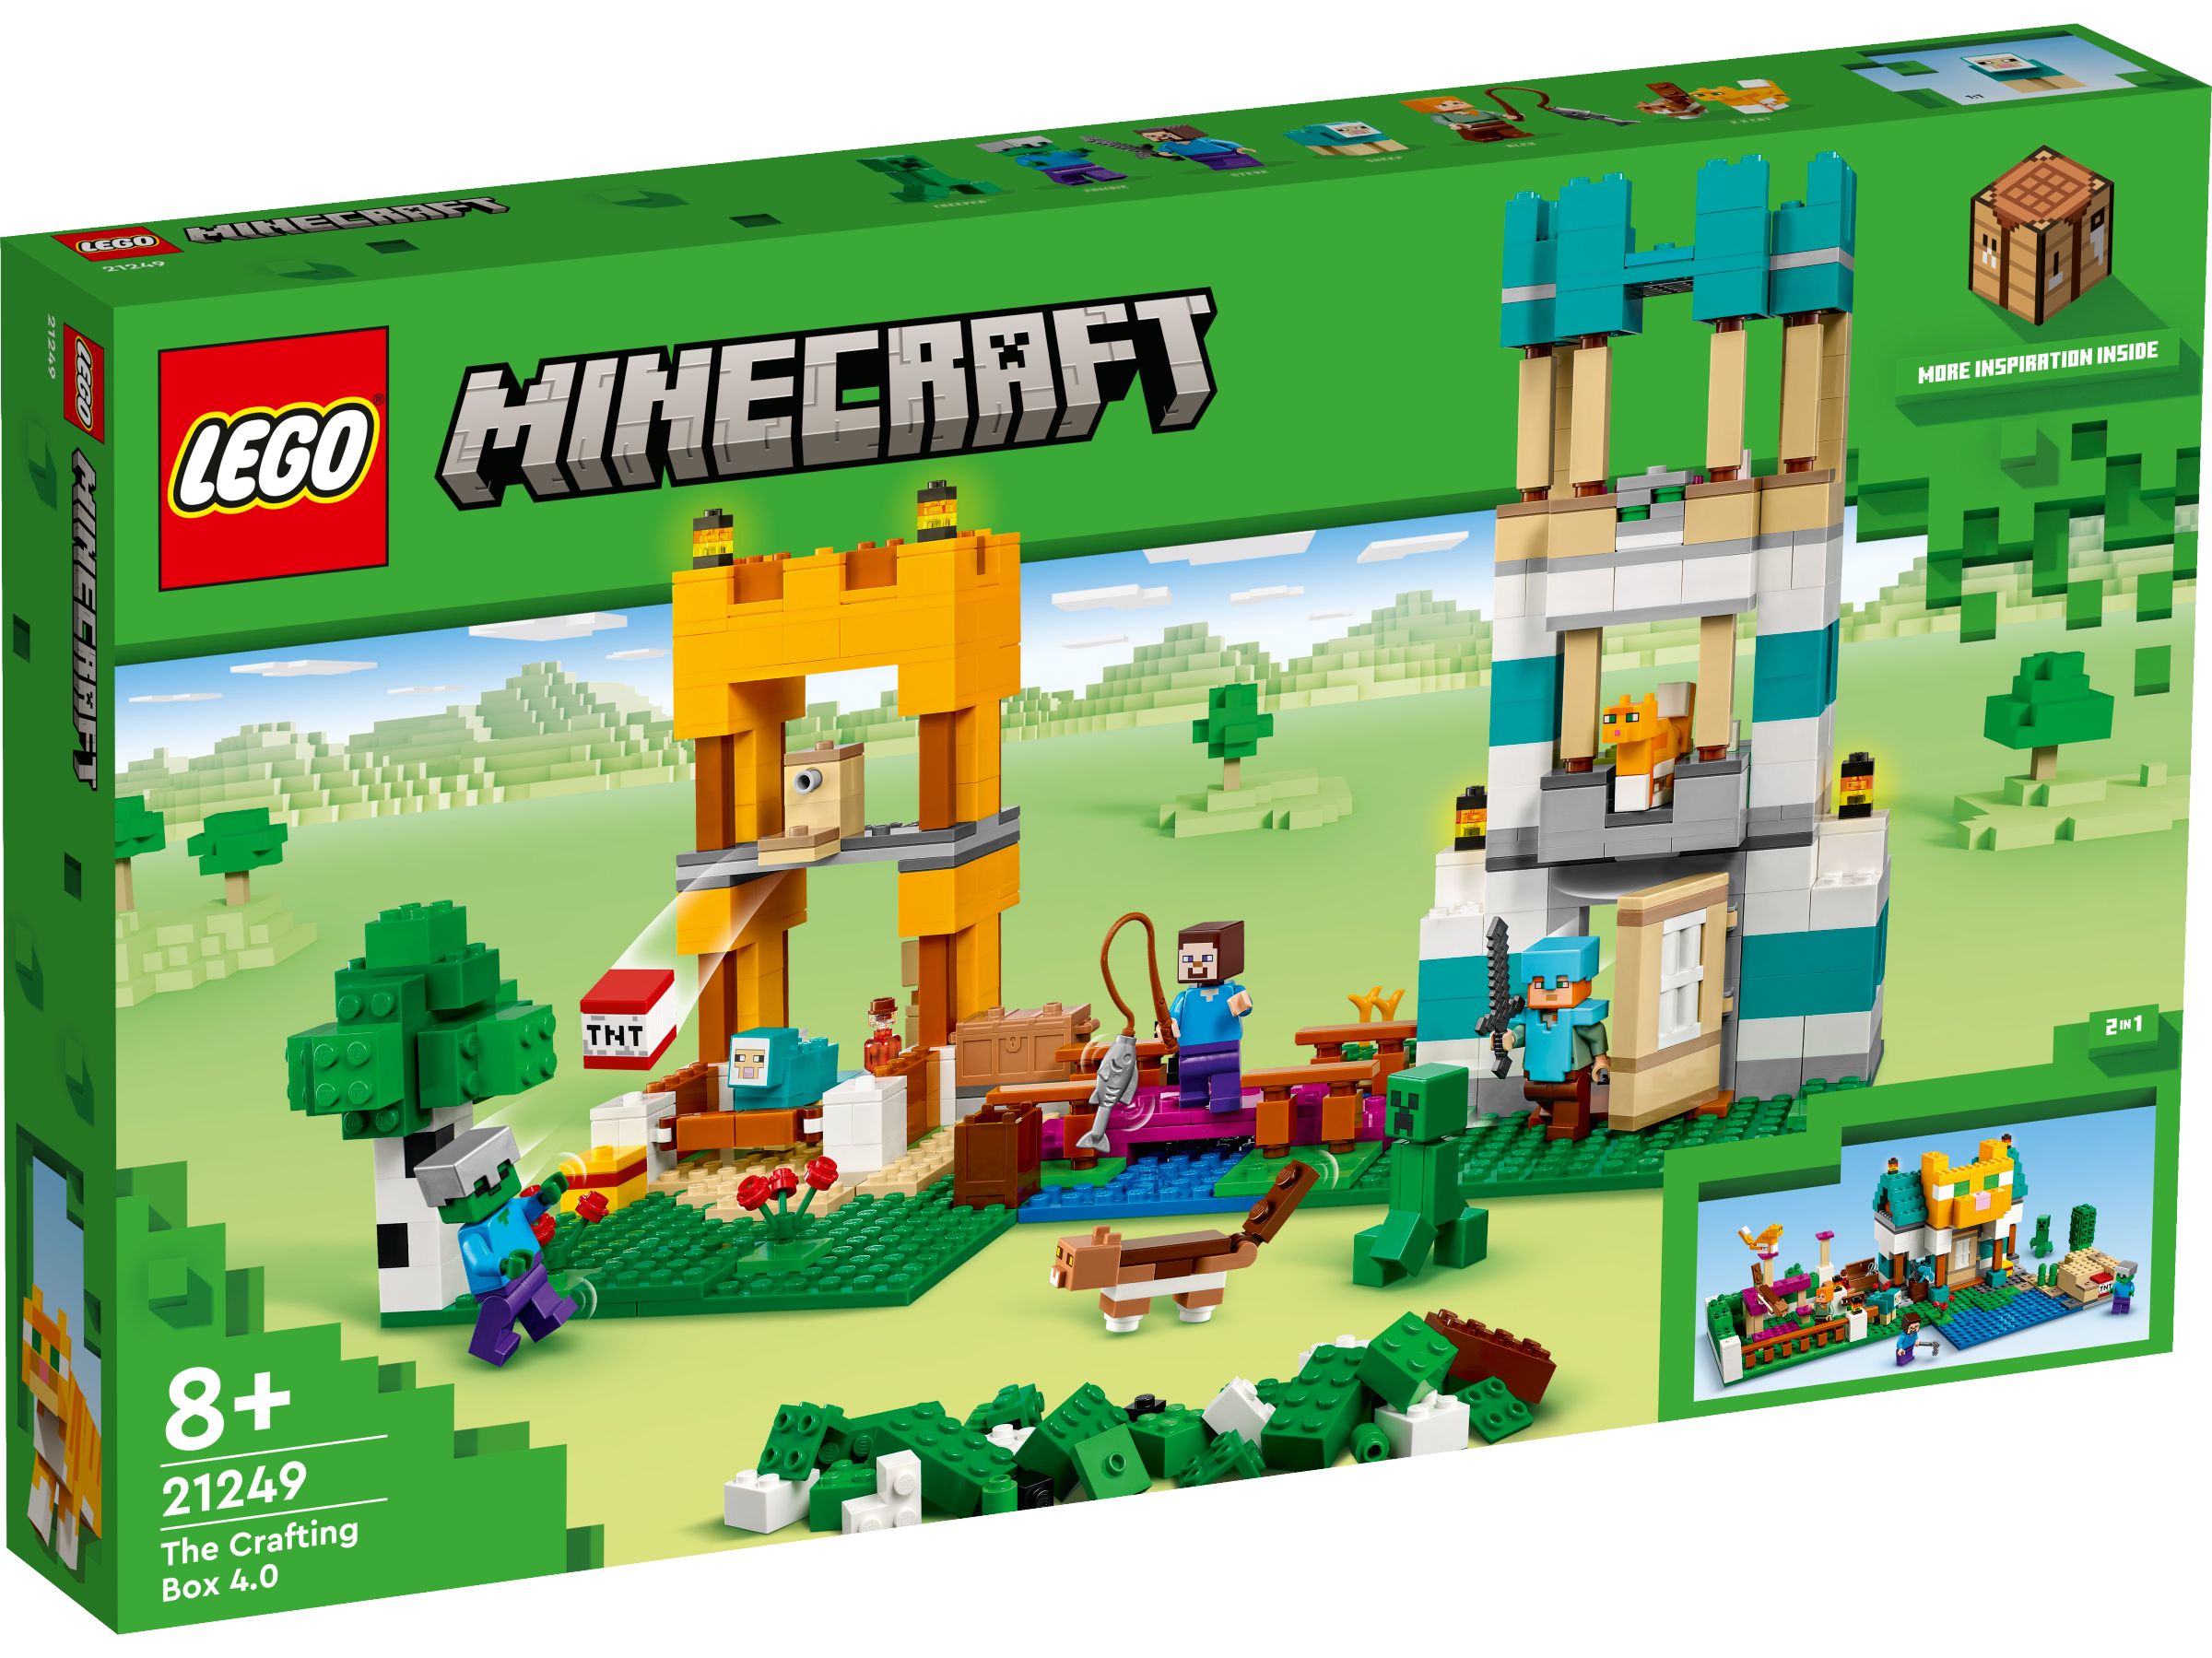 LEGO Minecraft 21249 Die Crafting-Box 4.0 LEGO_21249_Box1_v29.jpg